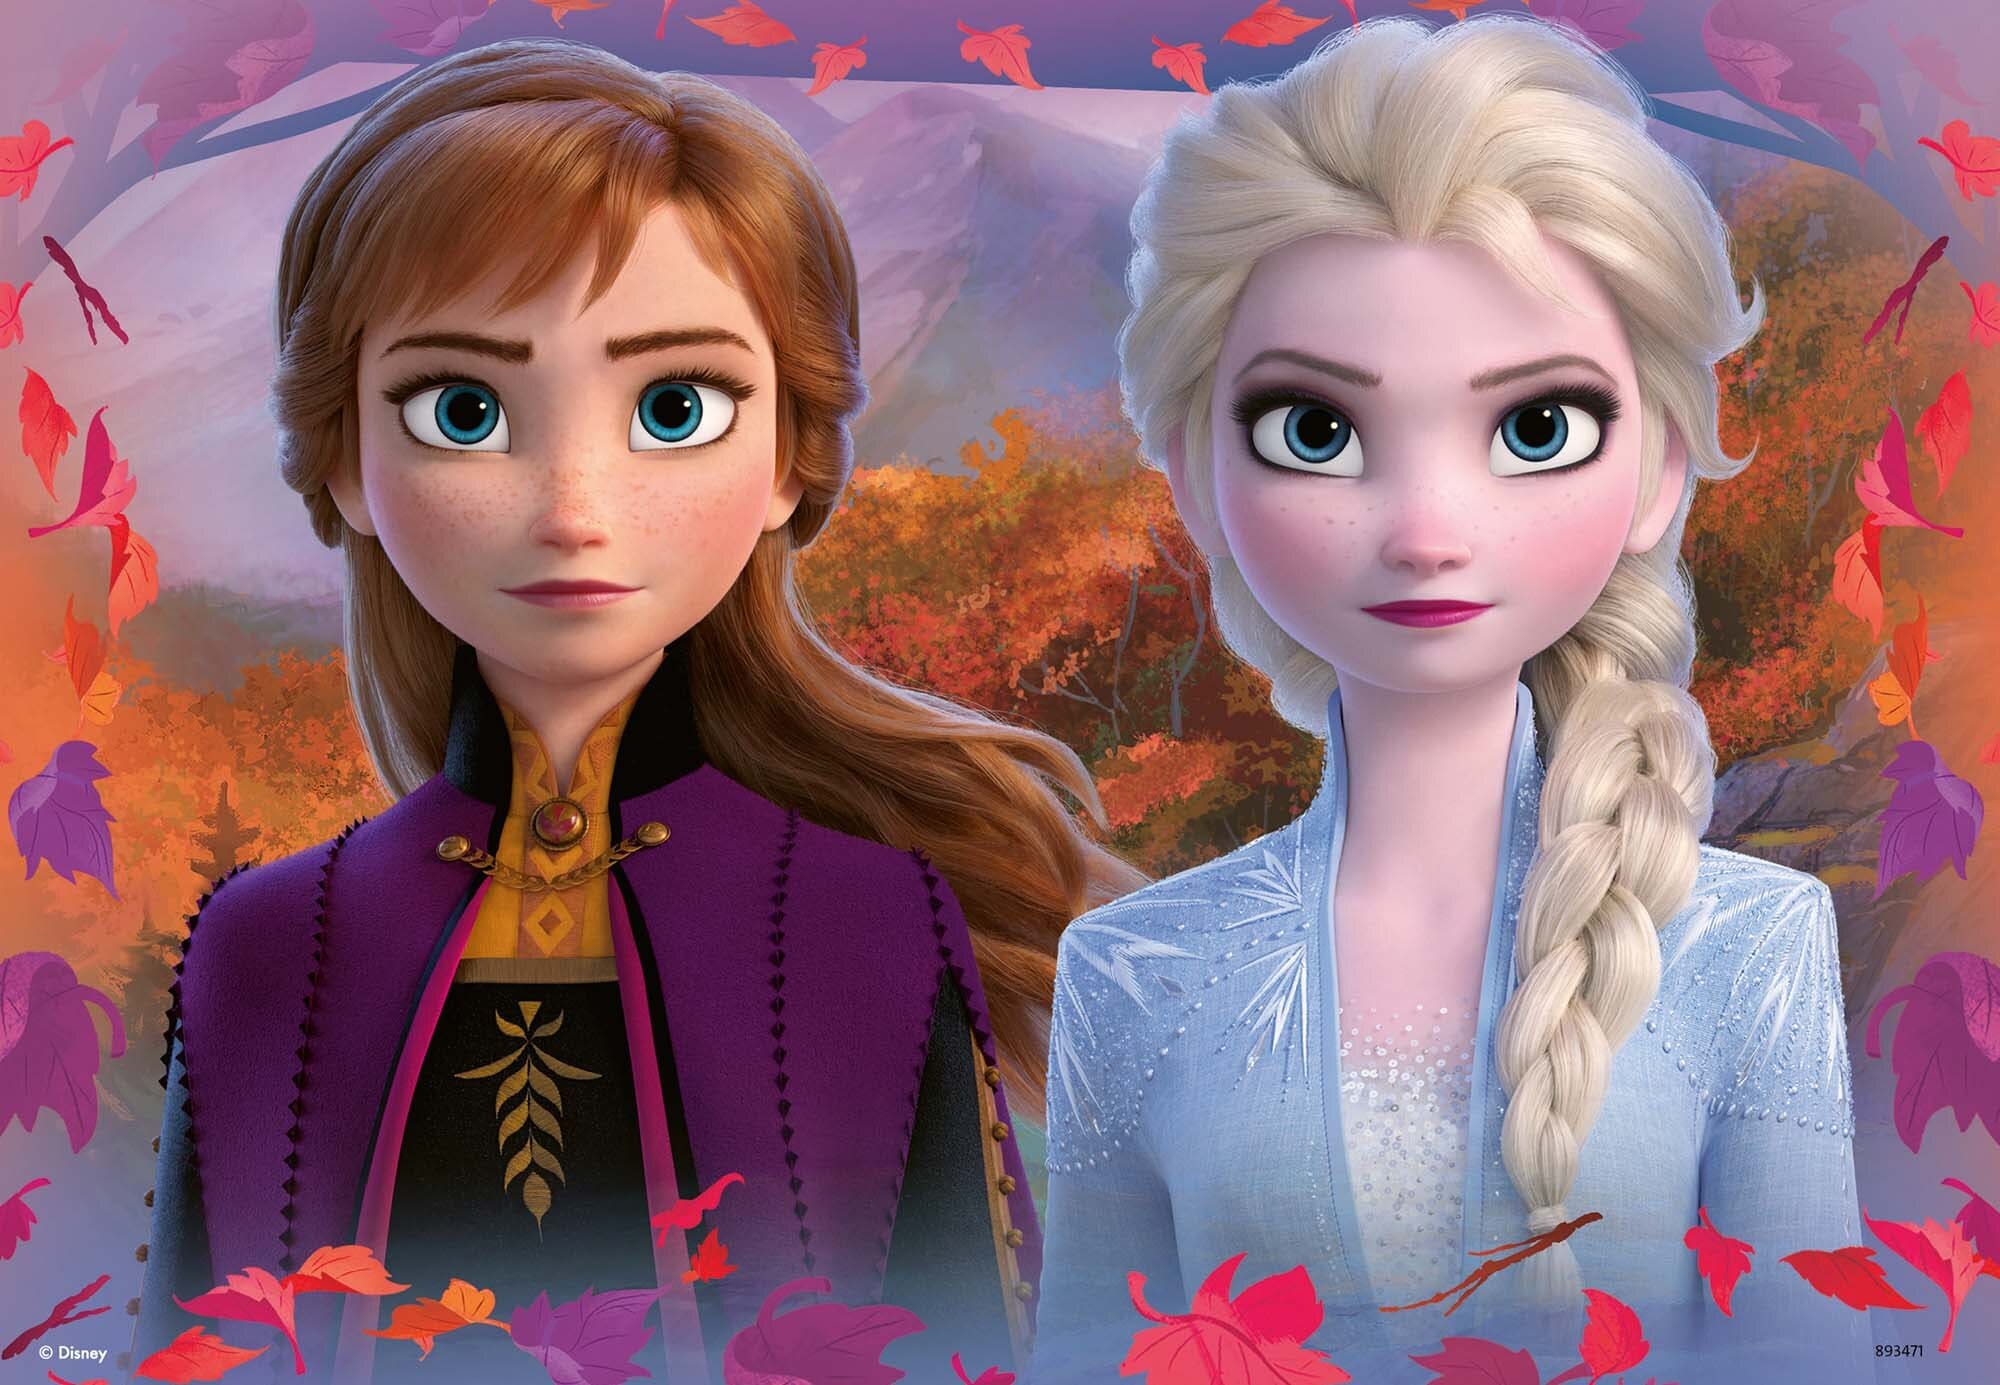 Ravensburger Puslespil, Disney - Frozen 2x12 brikker